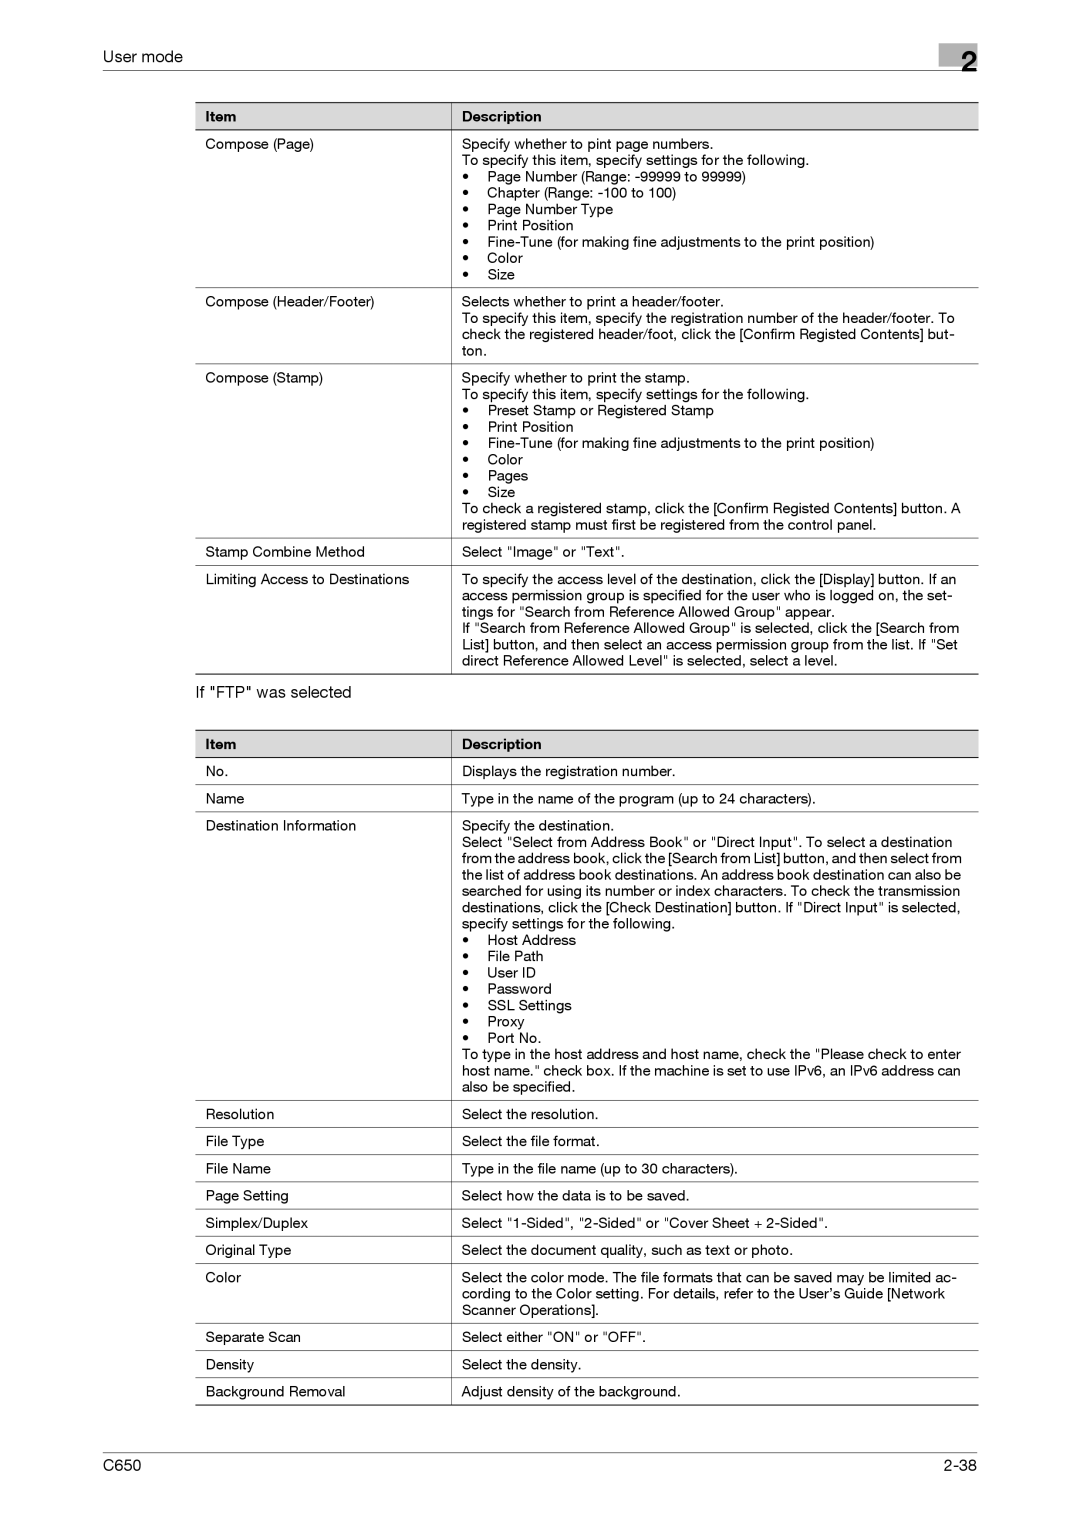 Konica Minolta C650 manual 2-38, User mode, If FTP was selected, Item, Description 